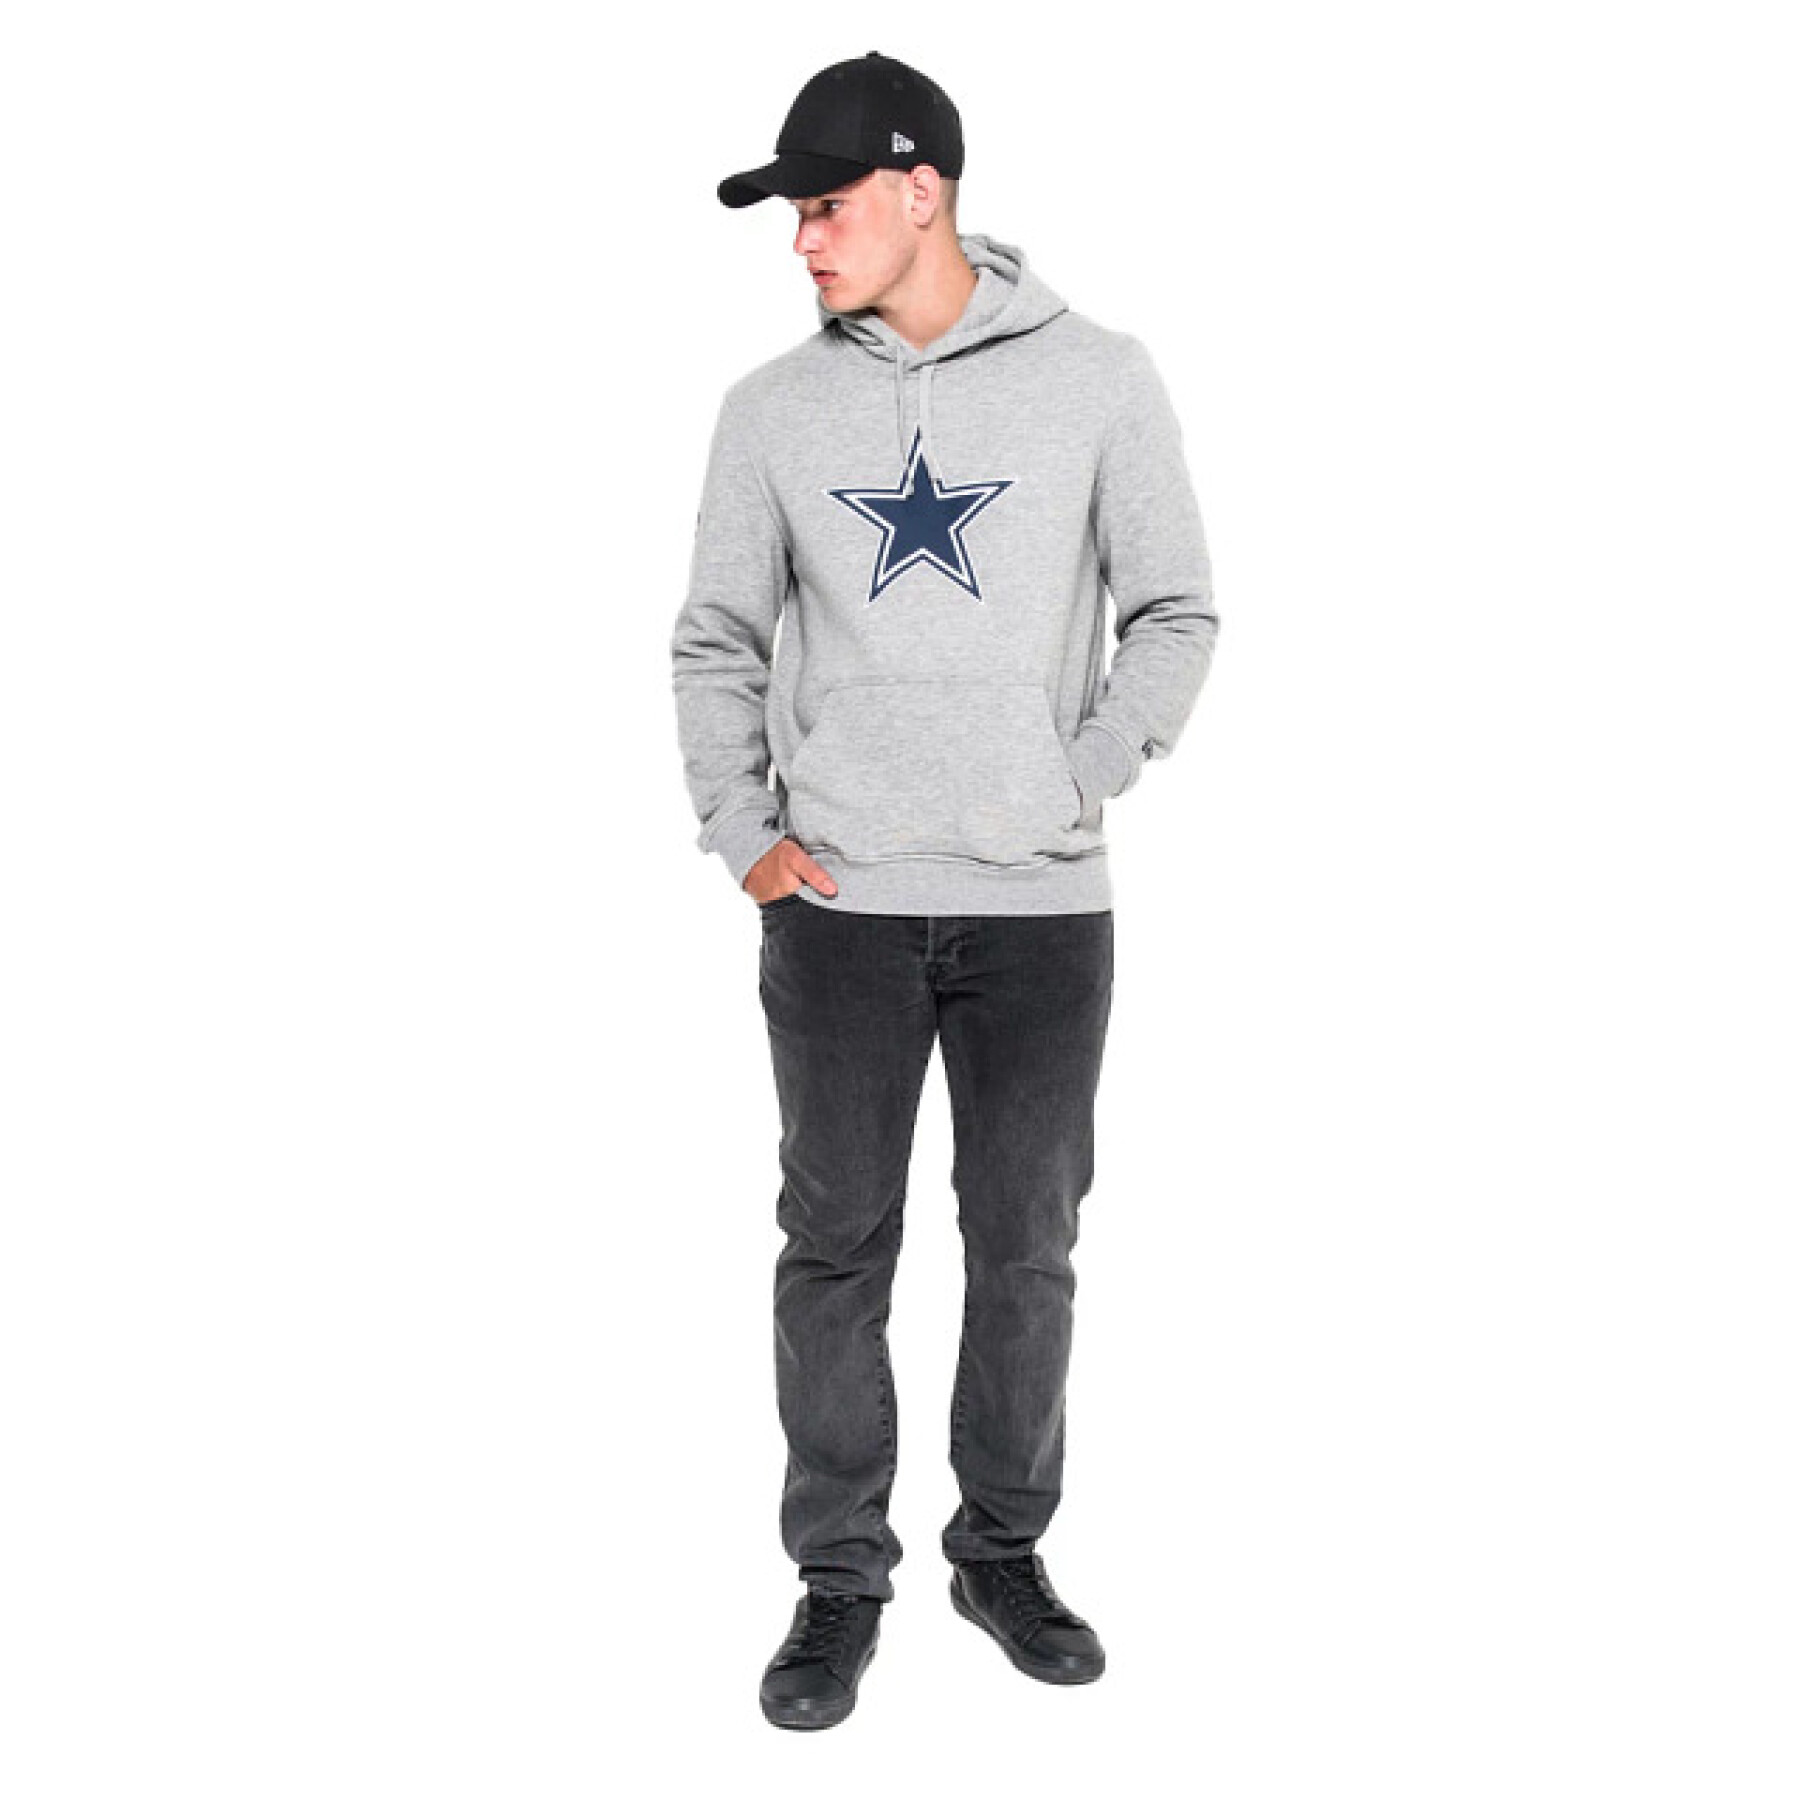 Hooded sweatshirt Dallas Cowboys NFL